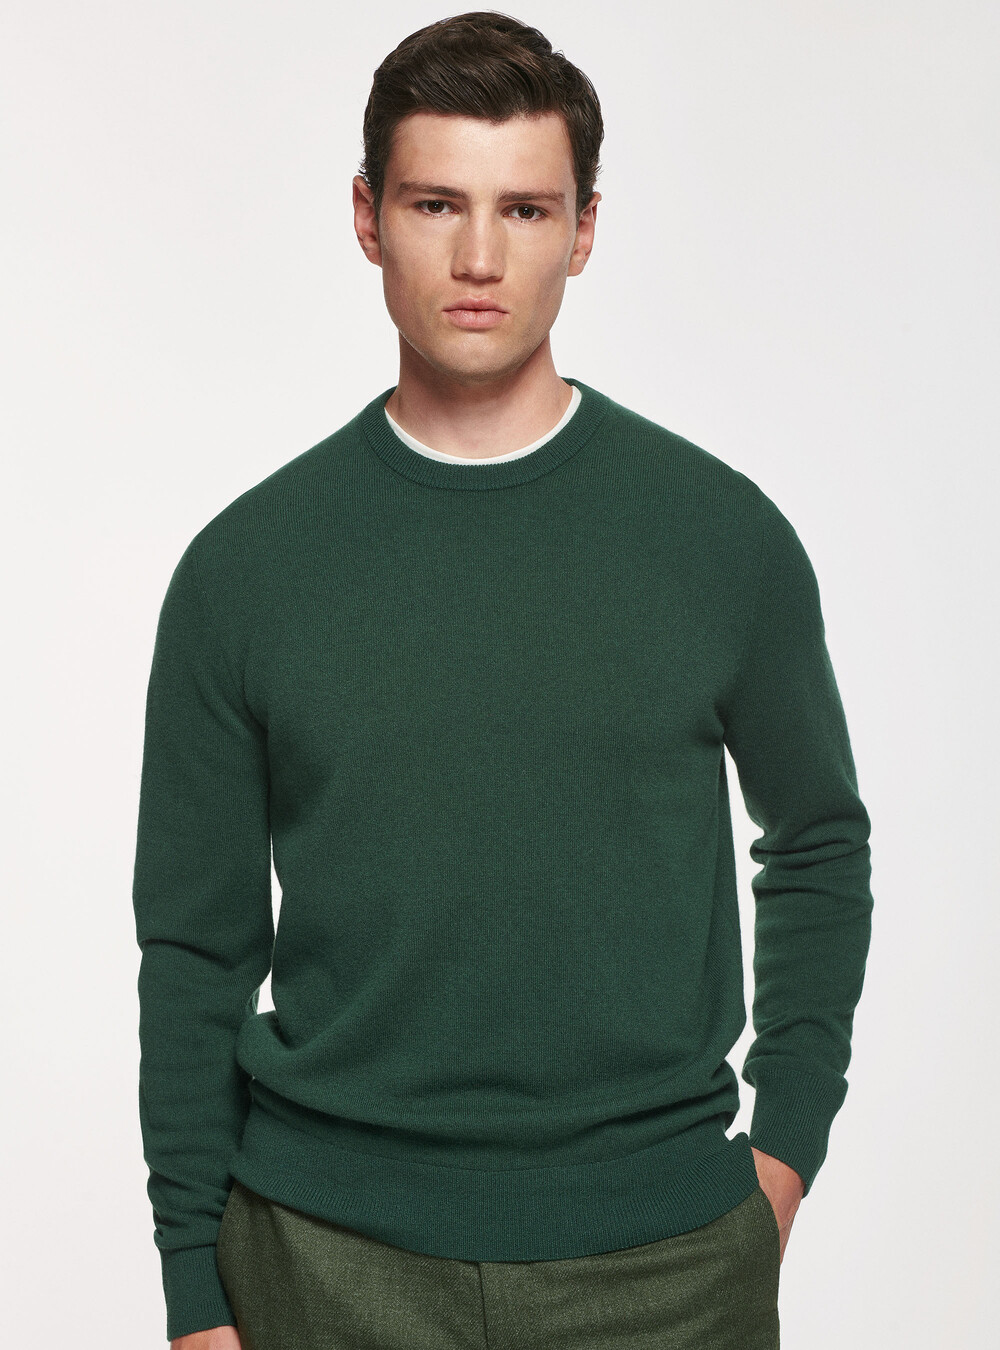 Lambswool and cashmere crew-neck sweater | GutteridgeUS | Men's catalog ...